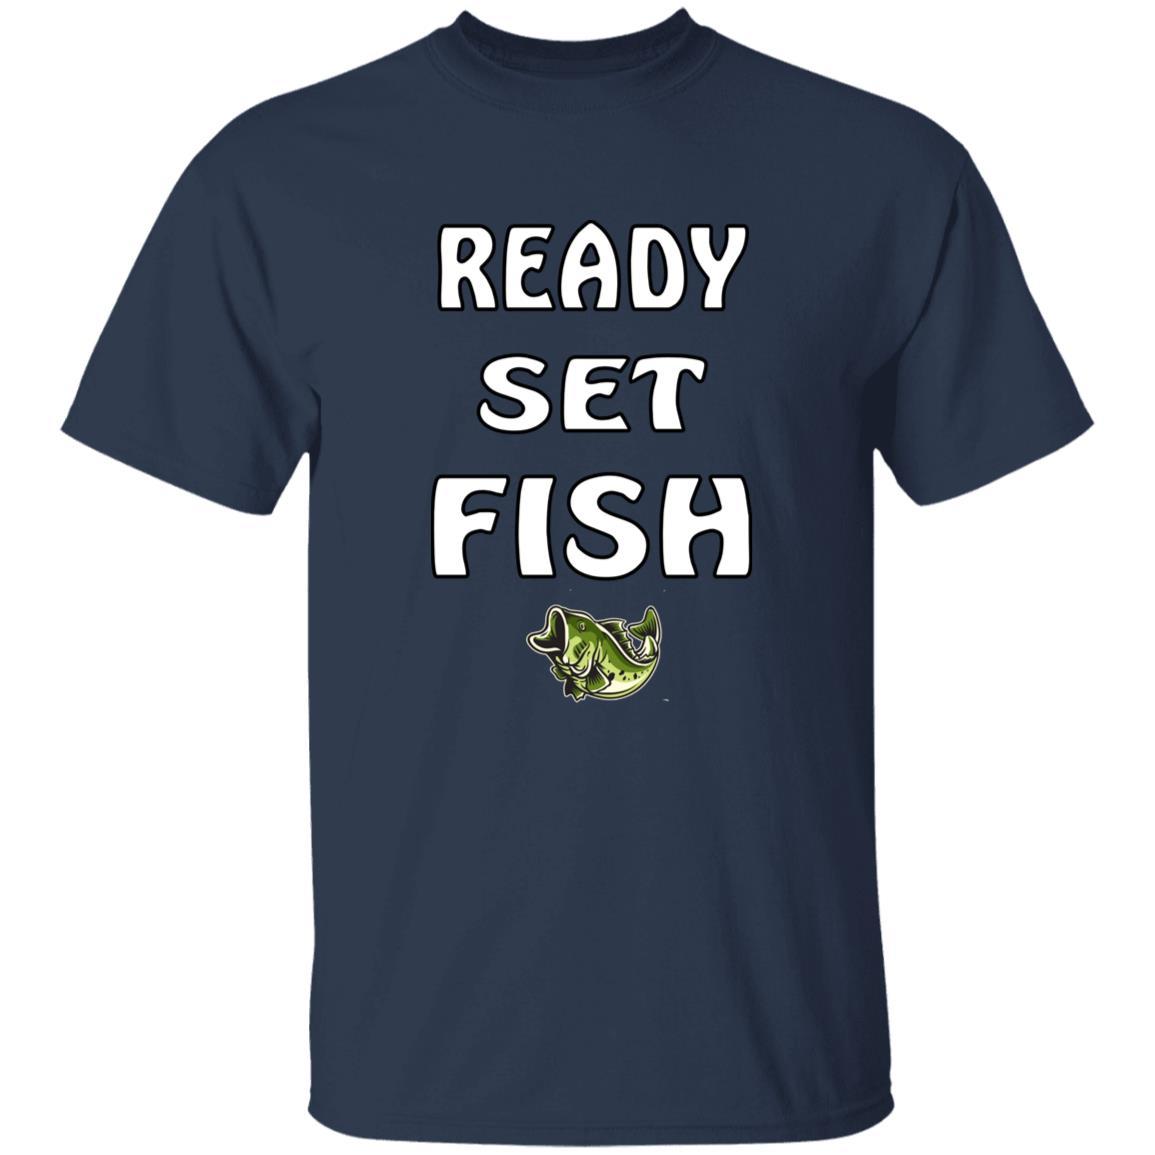 Ready set fish w t-shirt navy